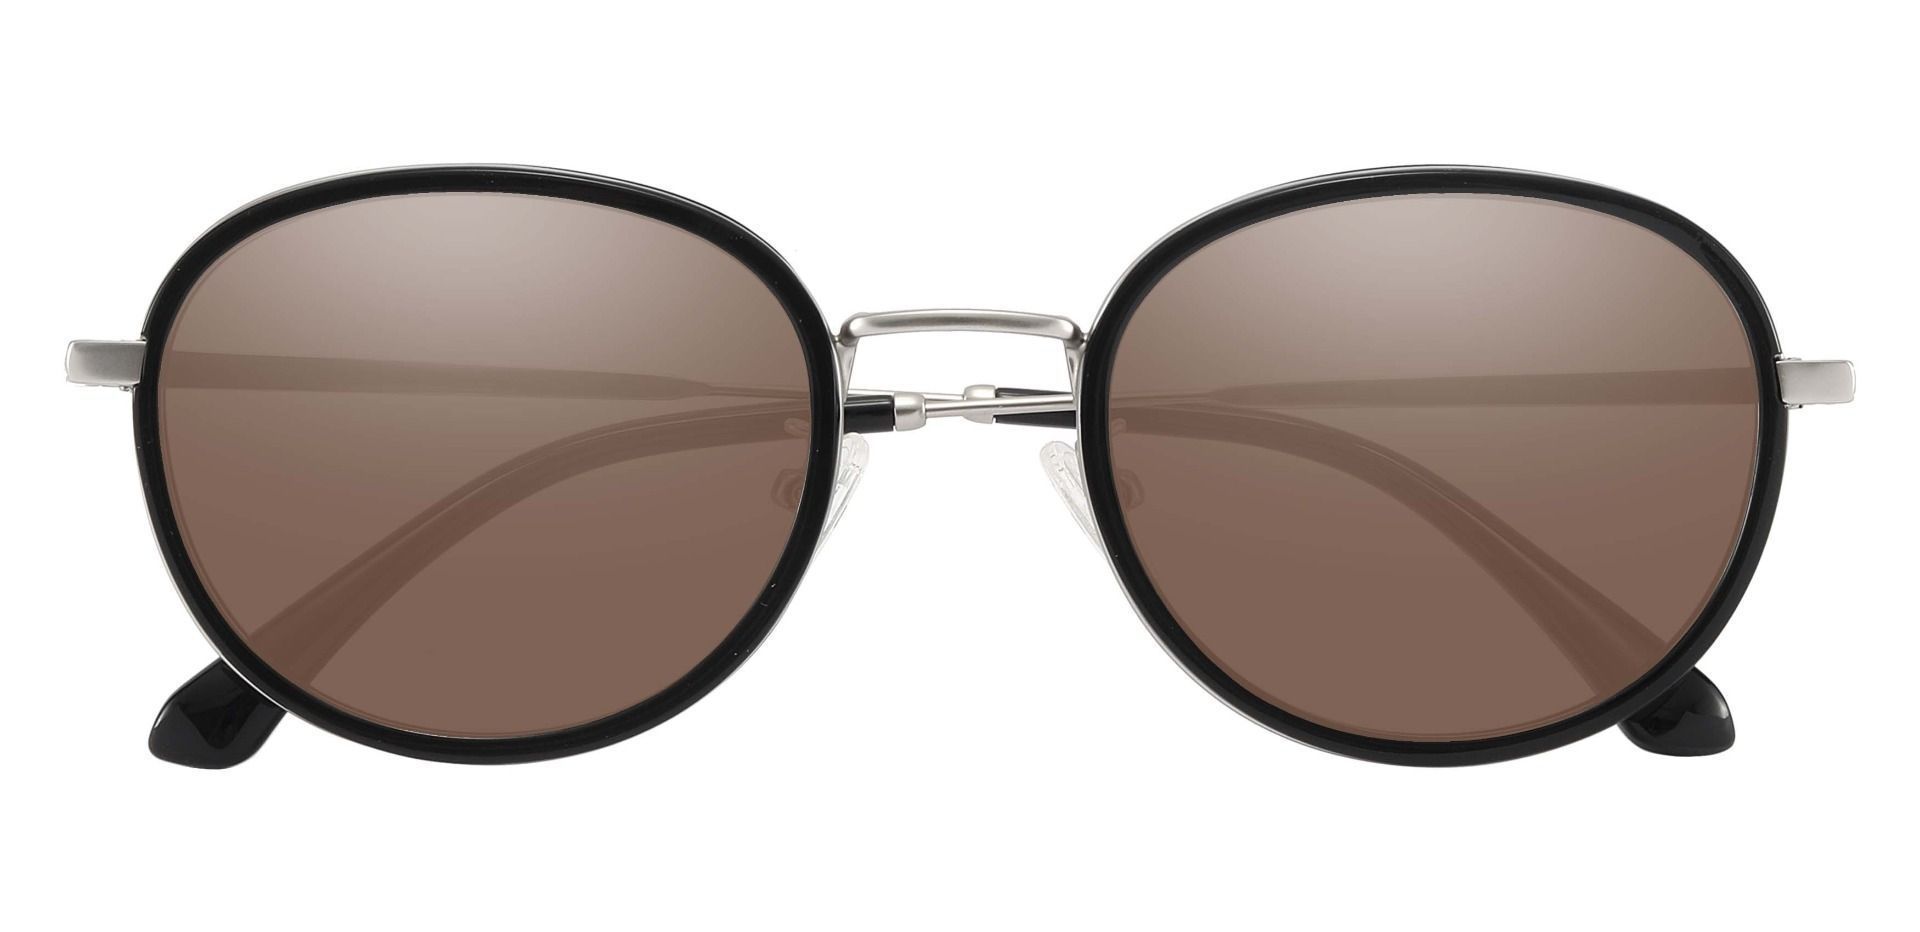 Edmore Oval Prescription Sunglasses - Black Frame With Brown Lenses